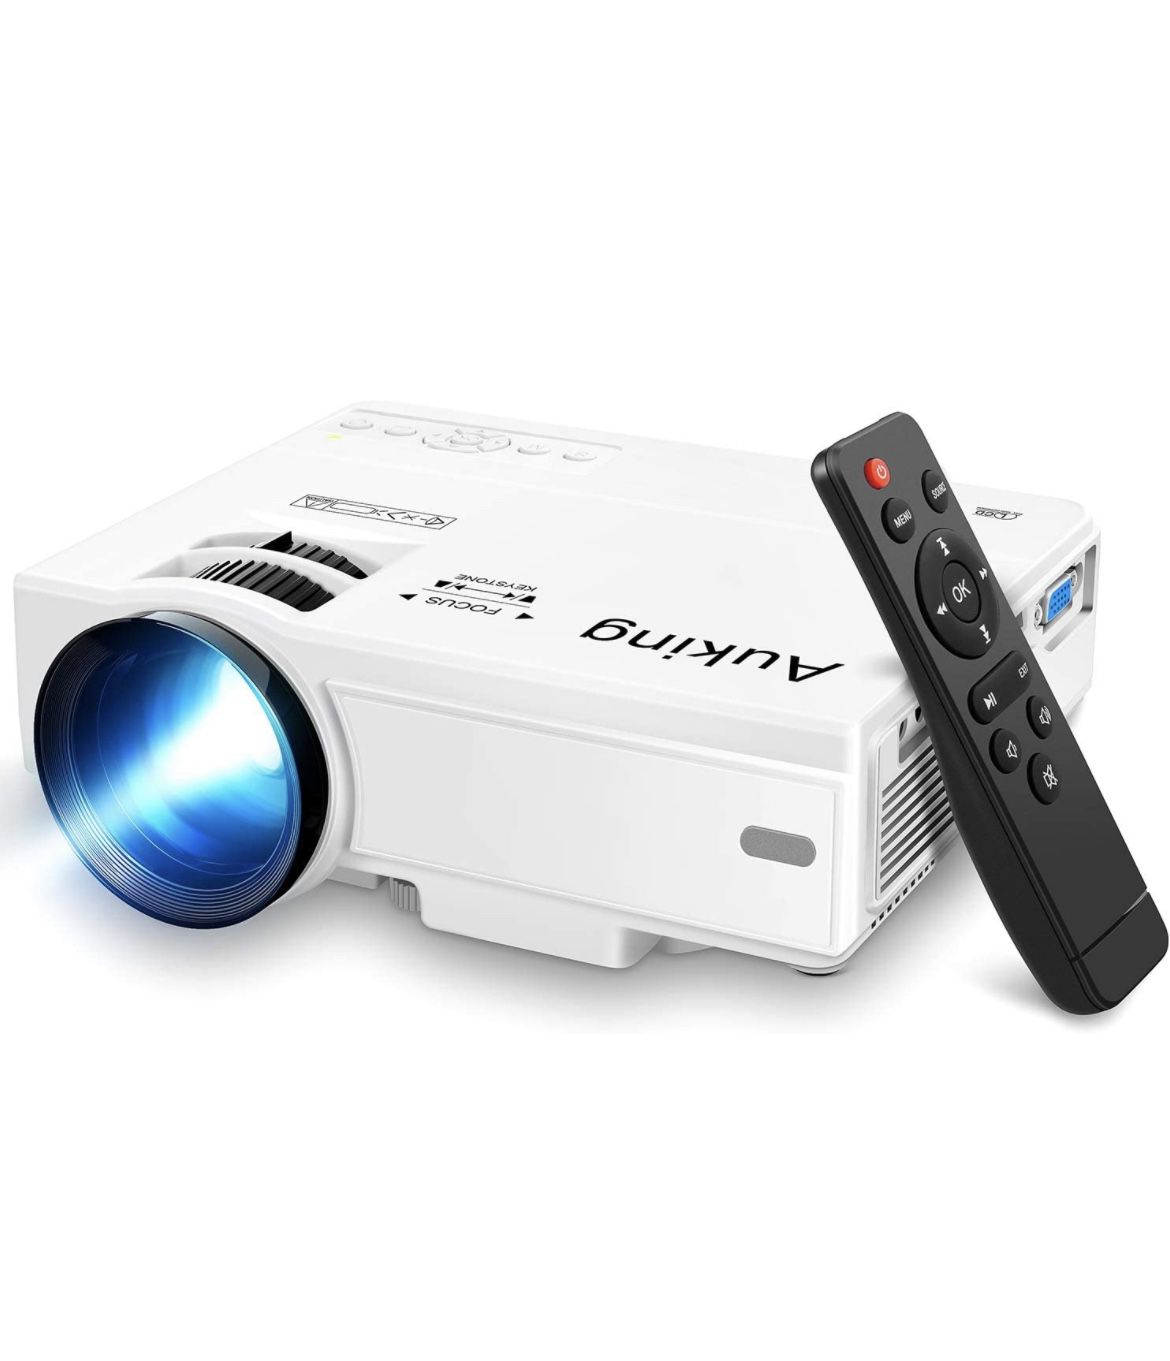 Mini projector AuKing (1080p) - $60 OBO